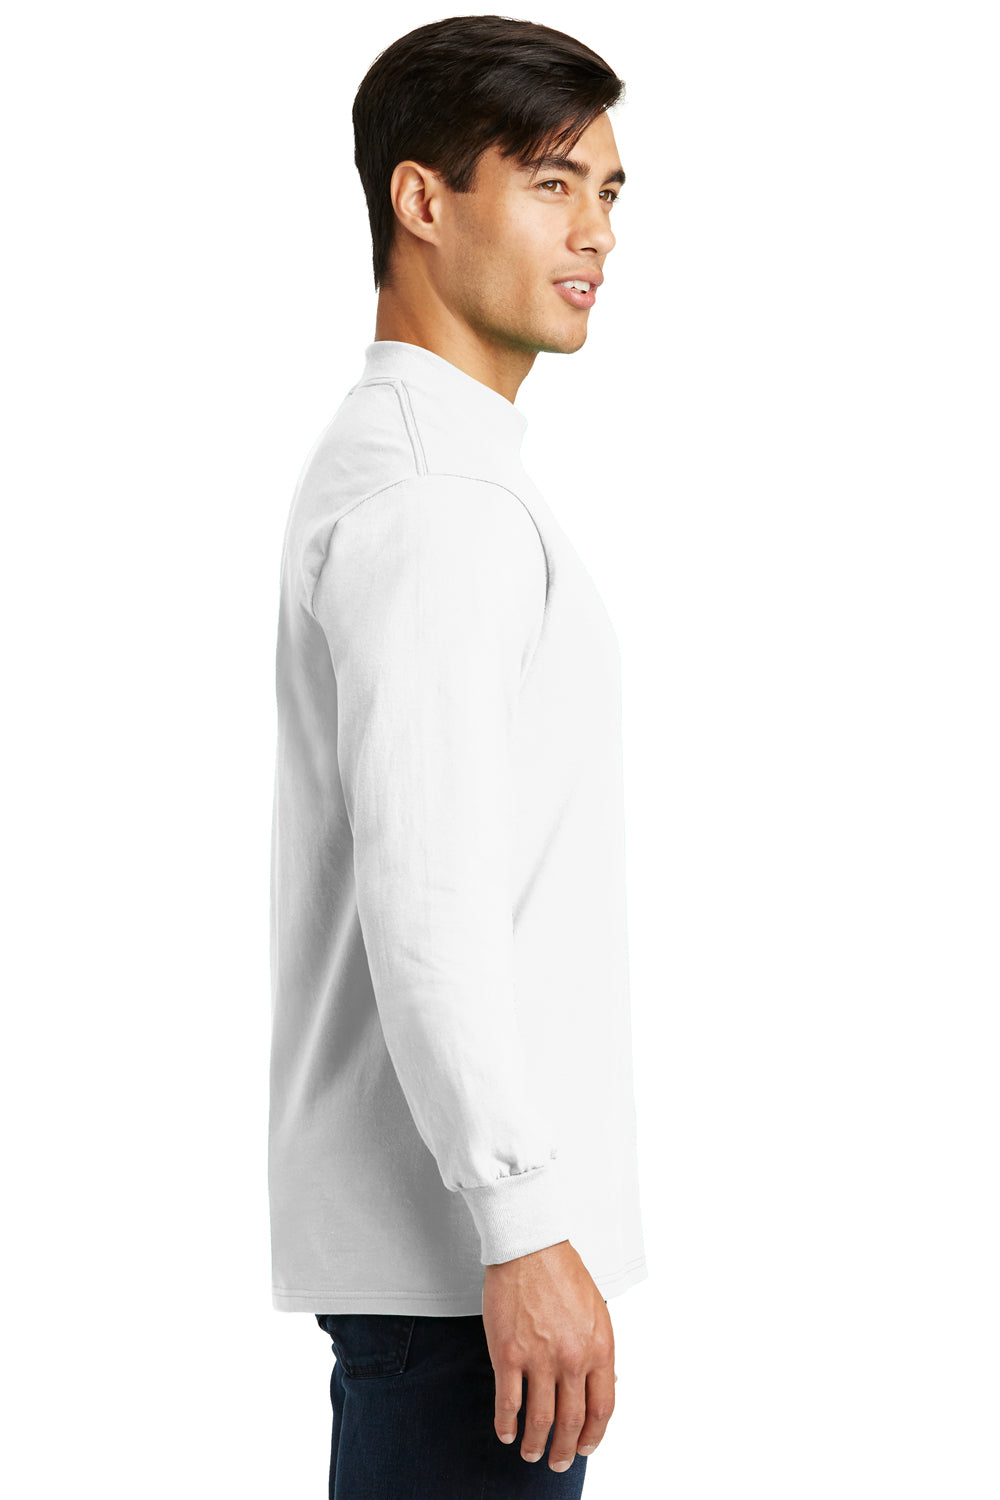 Port & Company PC61M Mens Essential Long Sleeve Mock Neck T-Shirt White Side